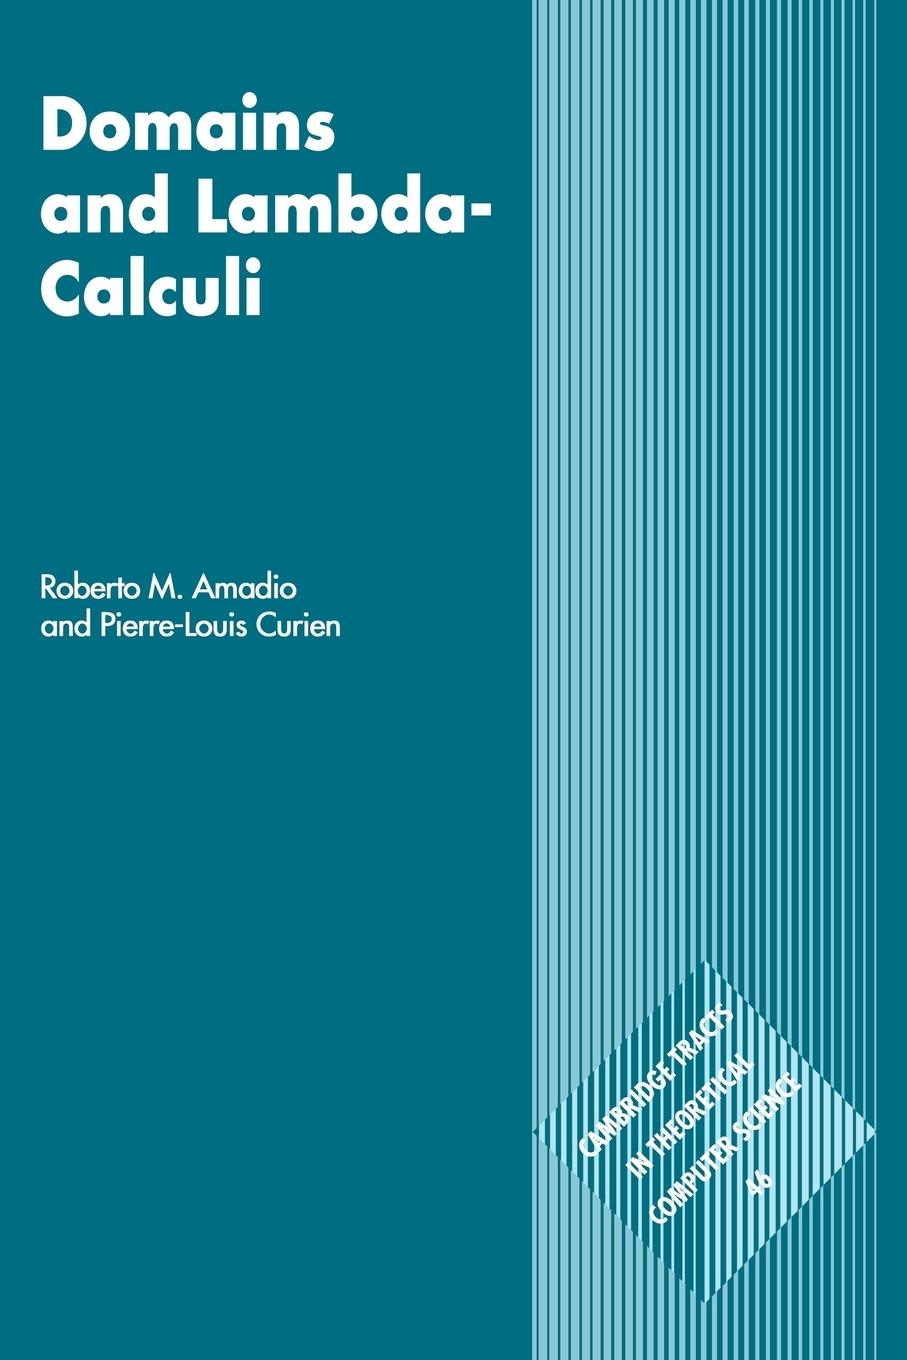 Domains and Lambda-Calculi - Amadio, Roberto M. Curien, Pierre-Louis